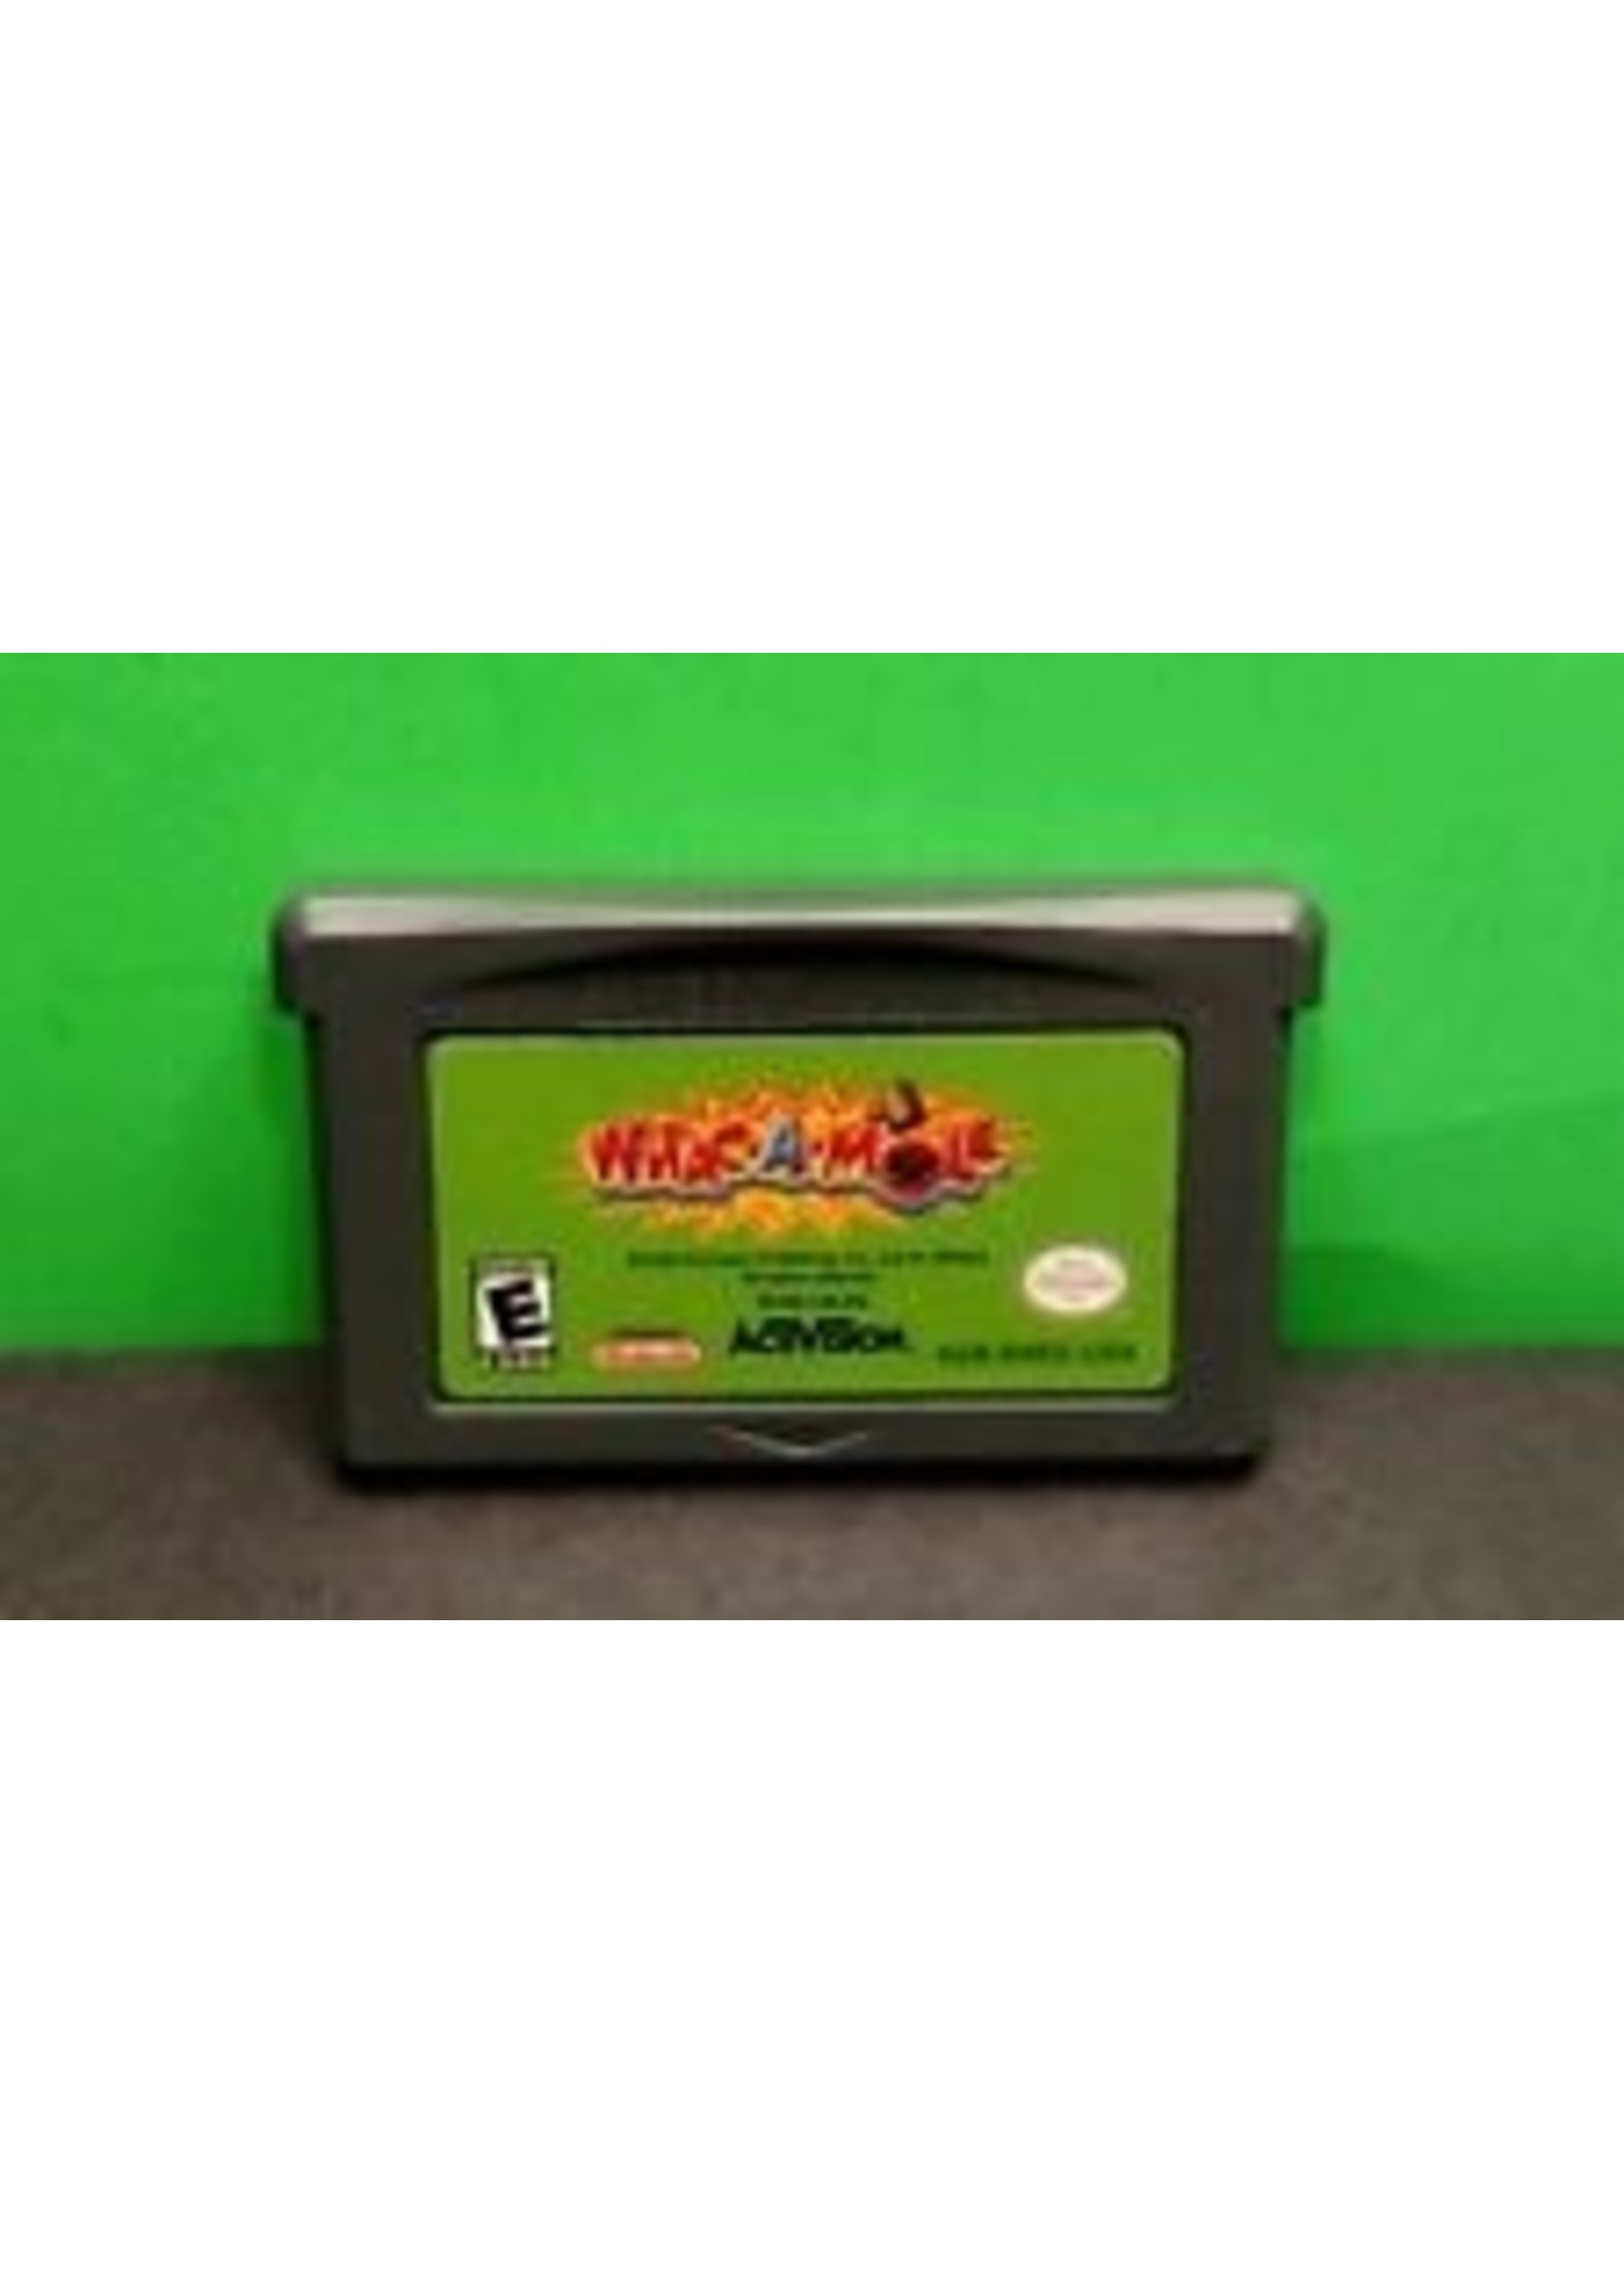 Nintendo Gameboy Advance Whac-A-Mole